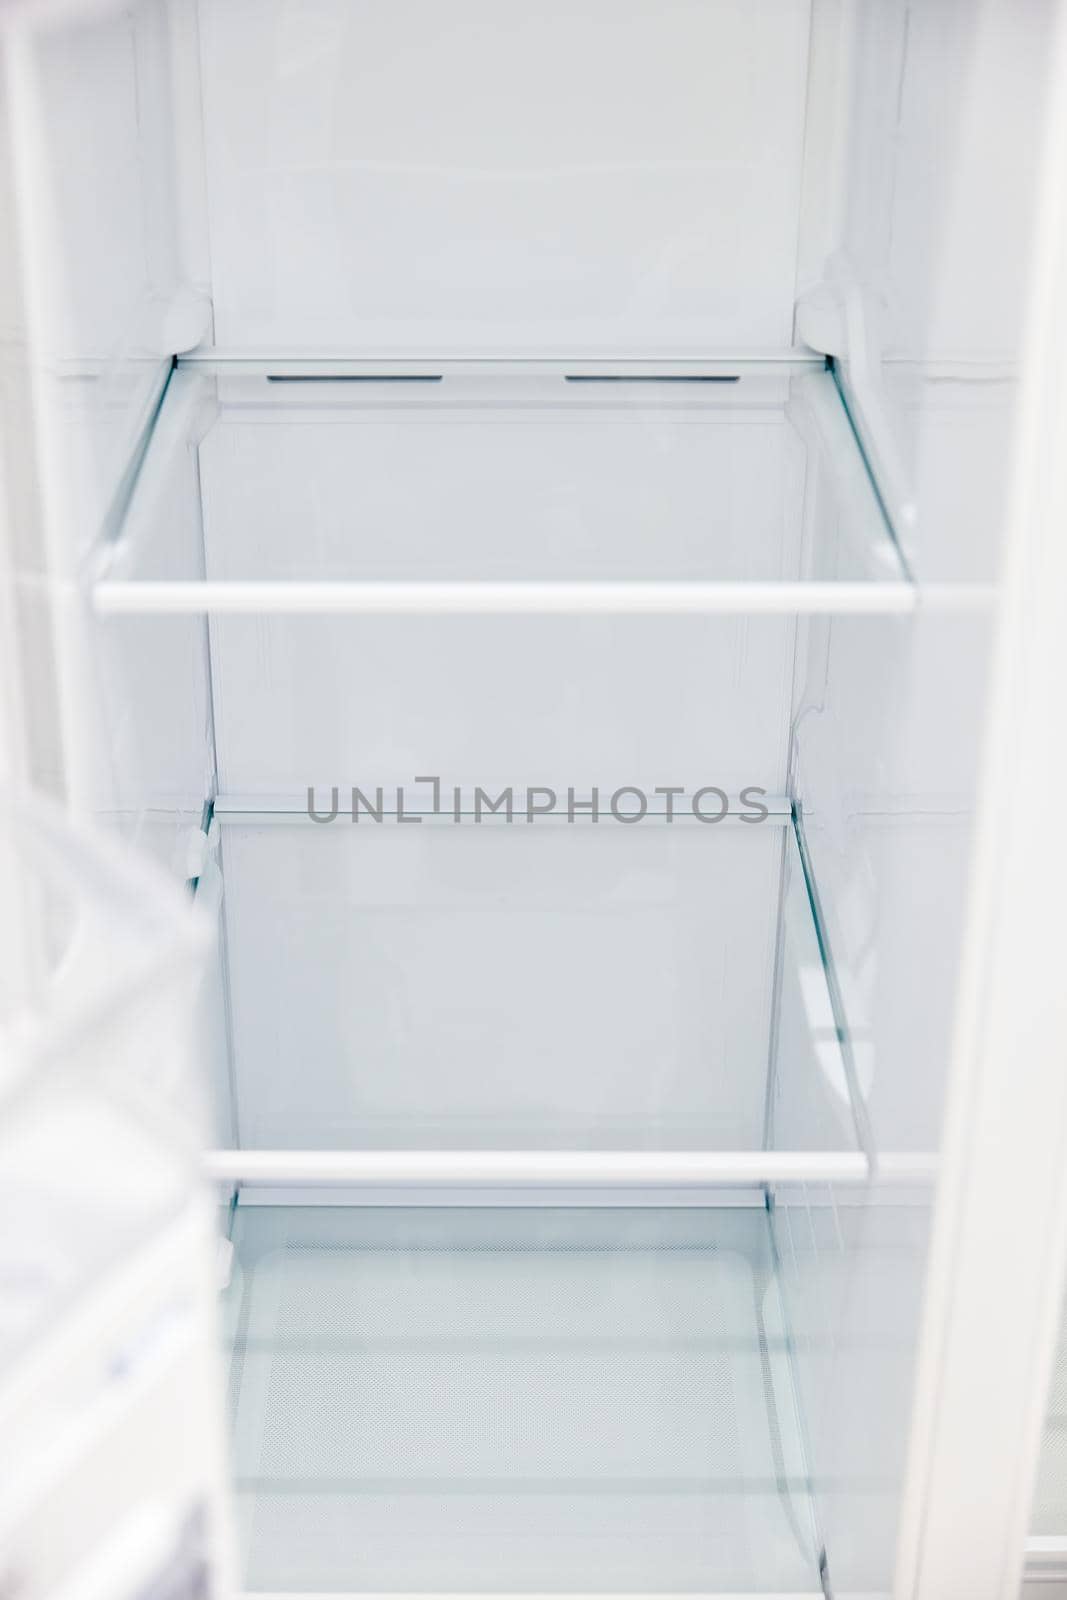 An empty refrigerator. Inside an empty, clean refrigerator, a refrigerator compartment after defrosting.